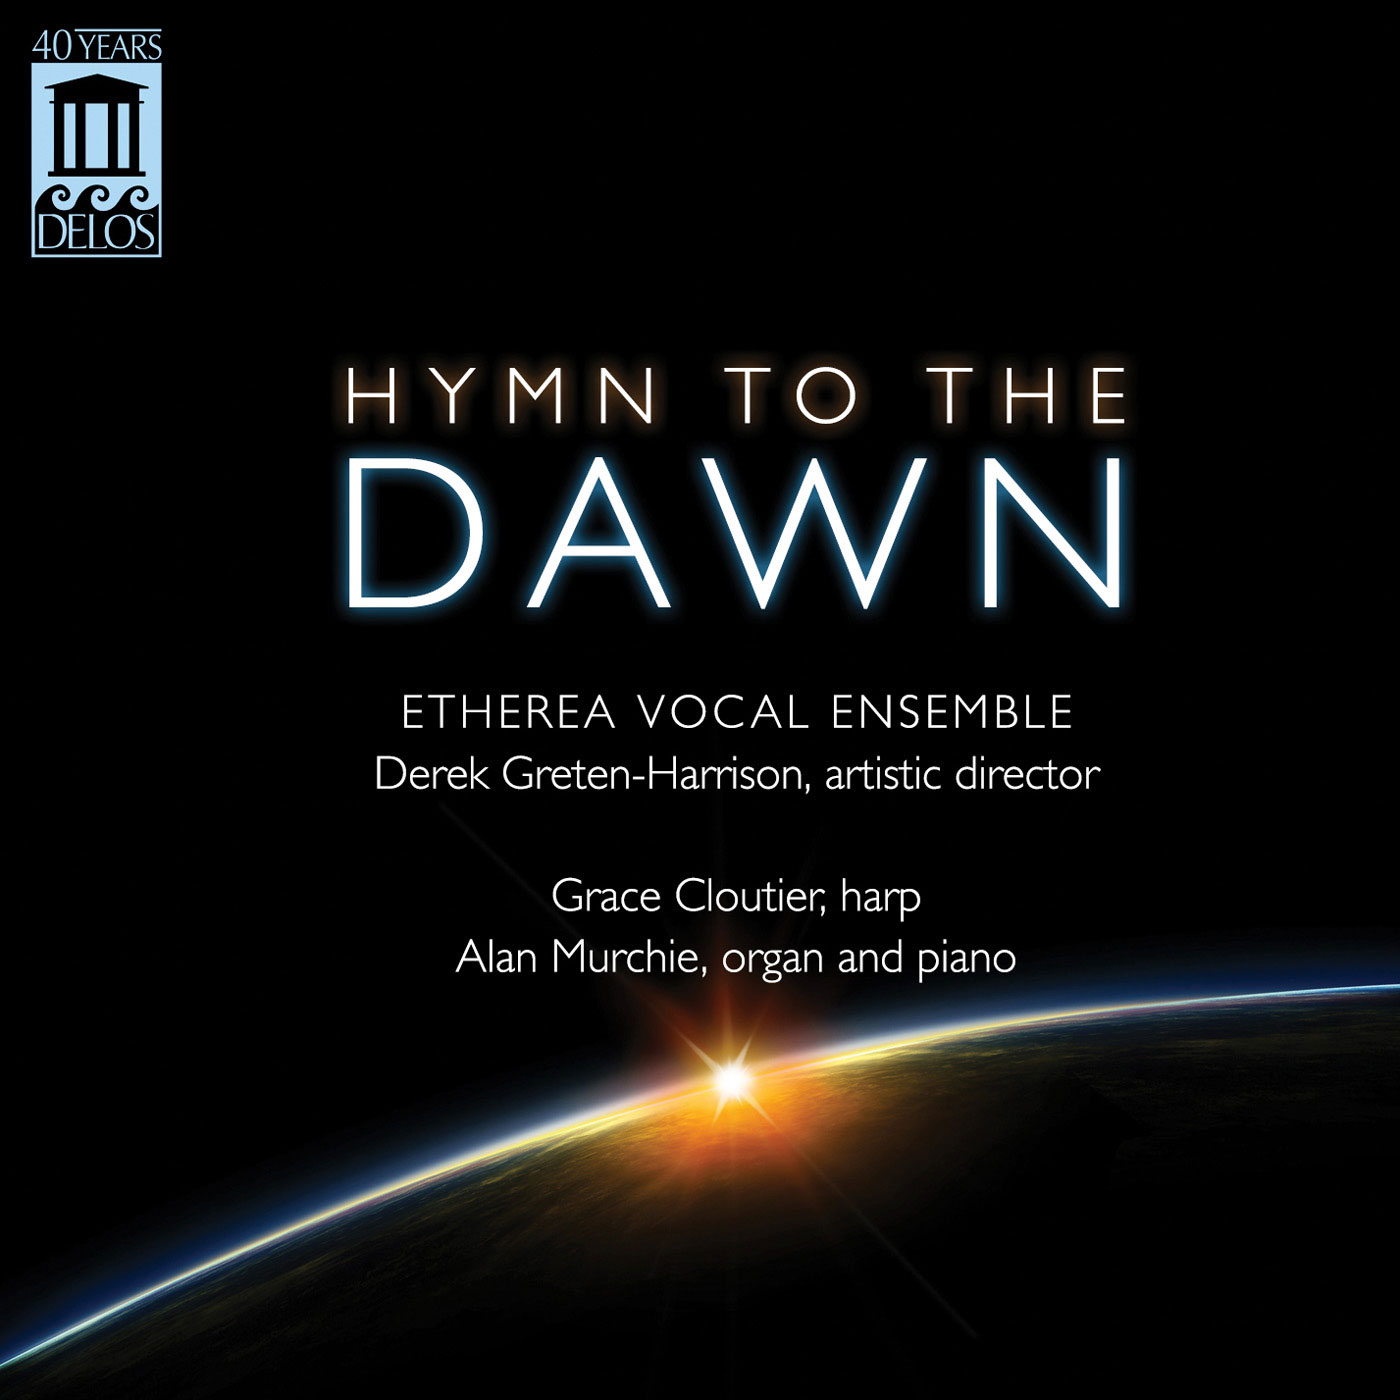 Hymn to the Dawn - works for female choir by Holst, Prokofiev, Beach, Rheinberger, Mendelssohn & Rossini / Etherea Vocal Ens.